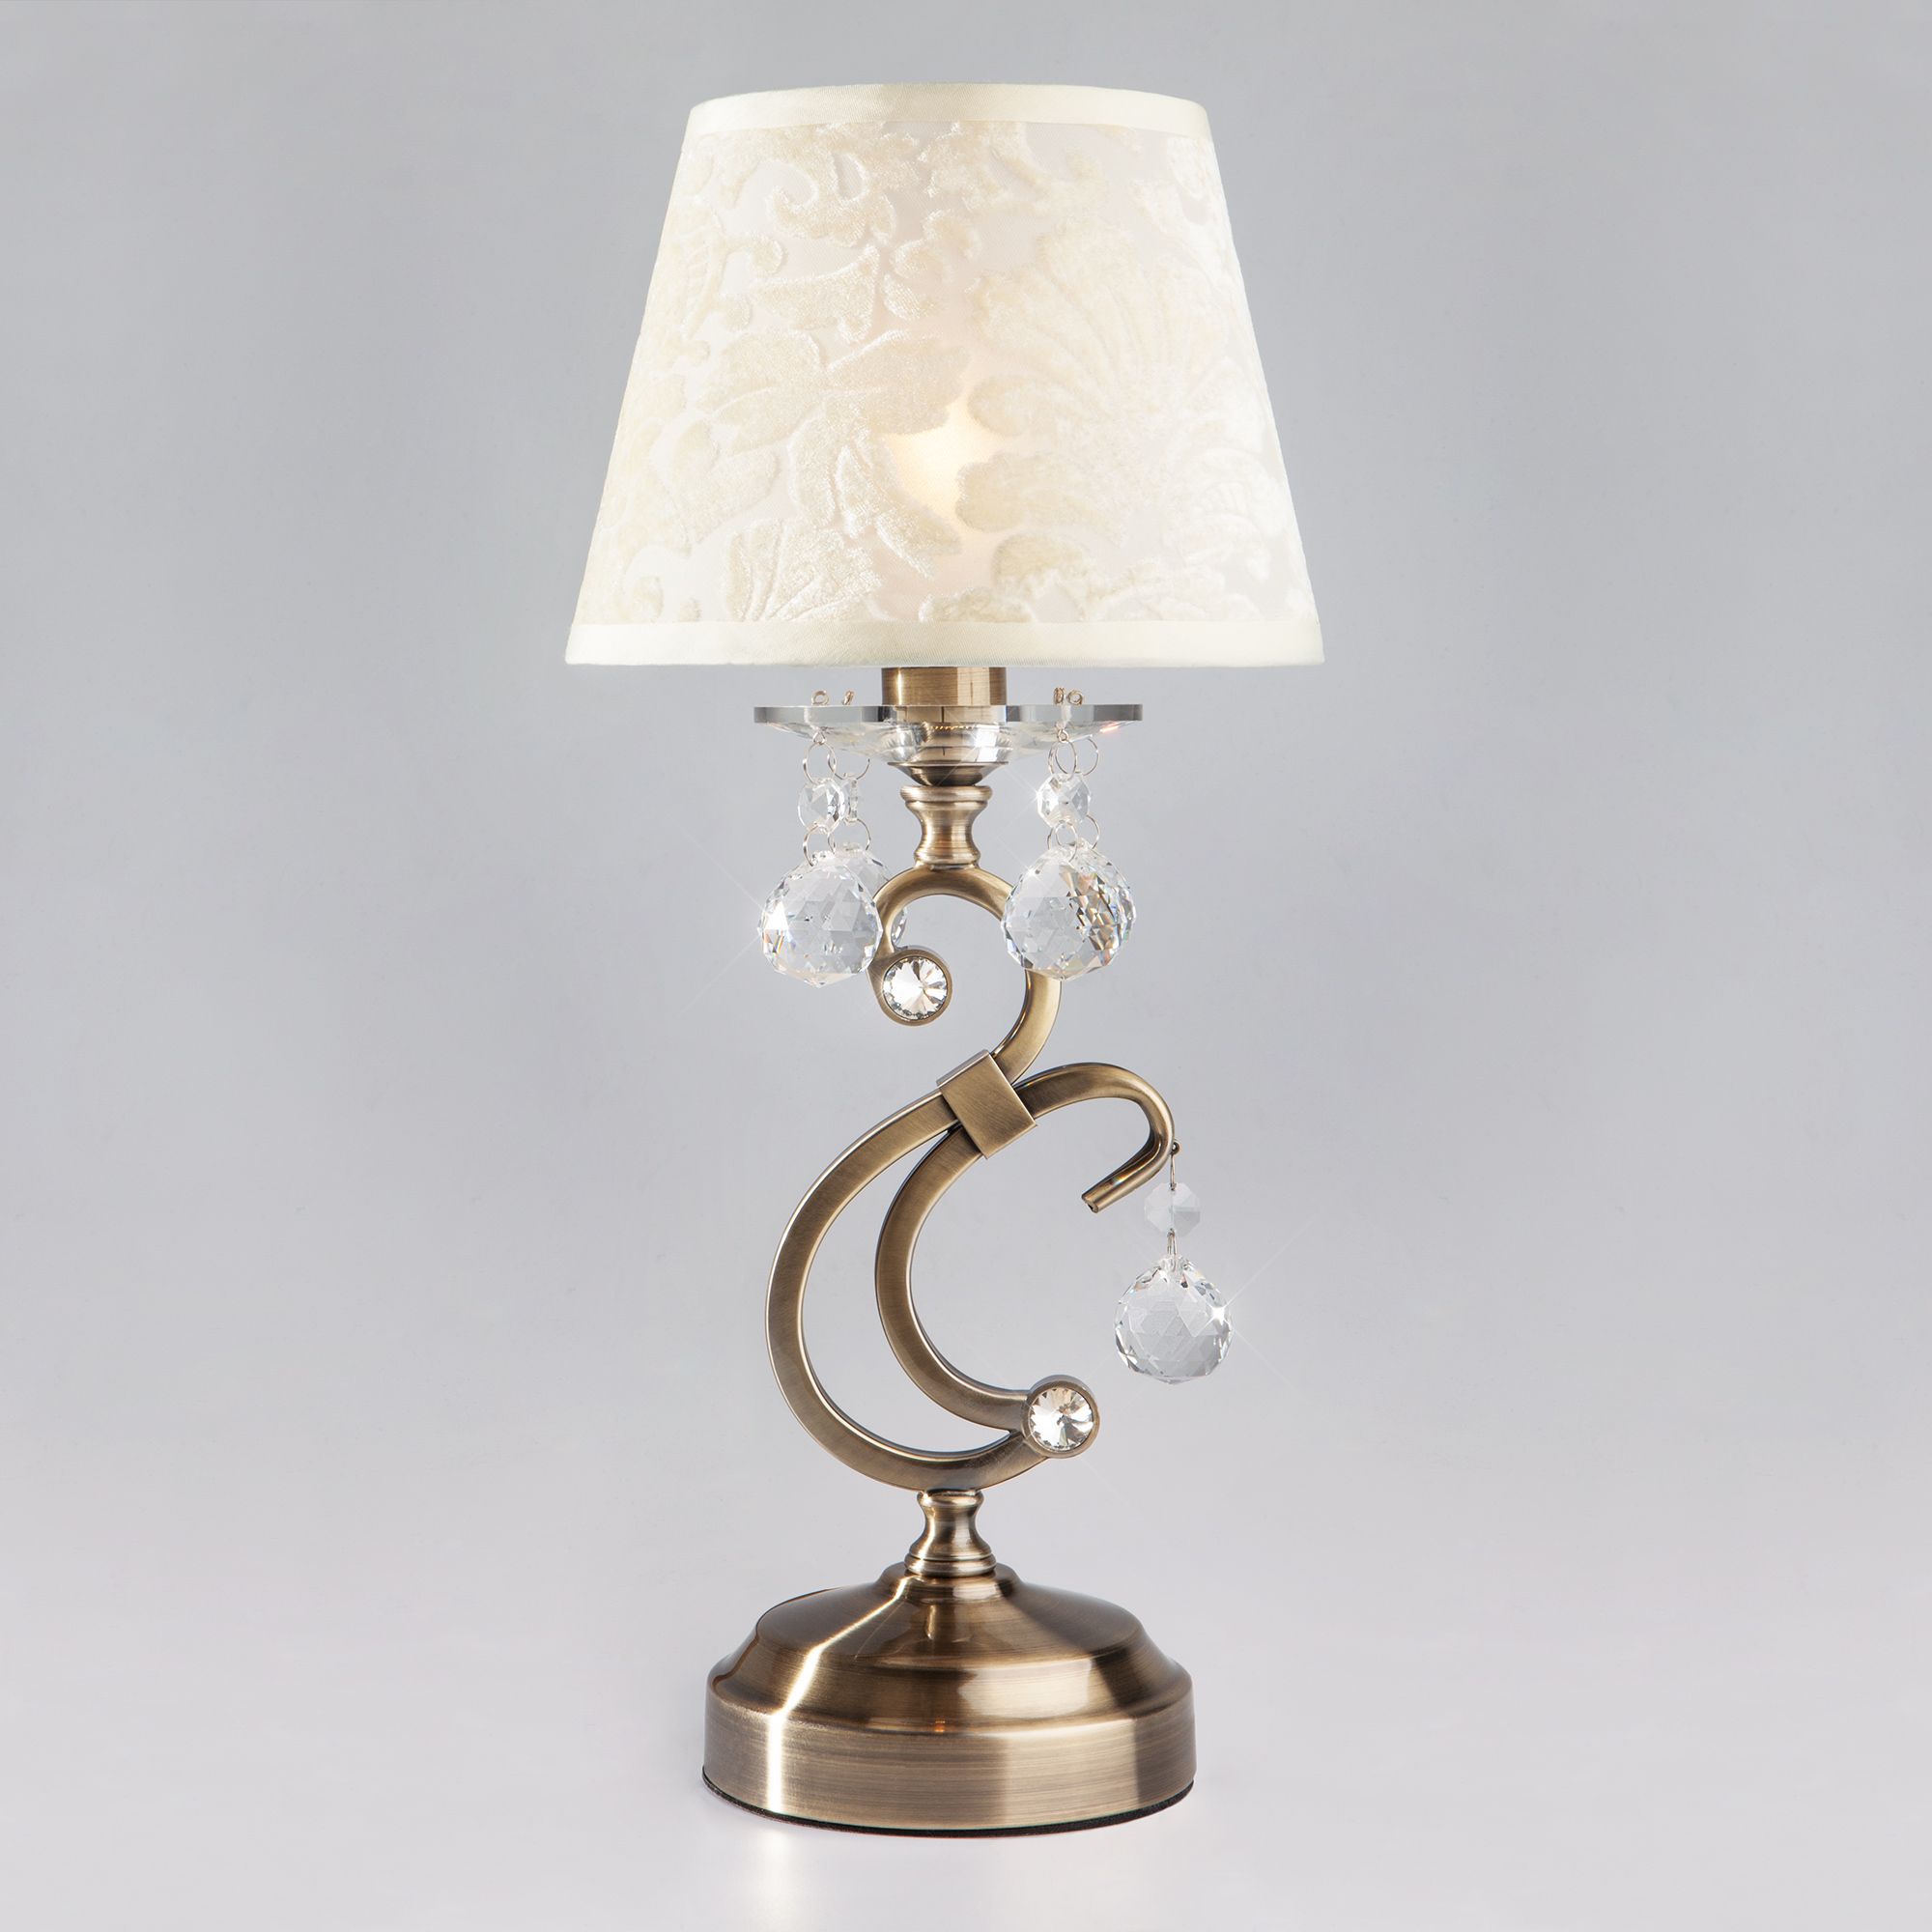 Классическая настольная лампа Eurosvet Eileen 1448/1T античная бронза. Фото 1